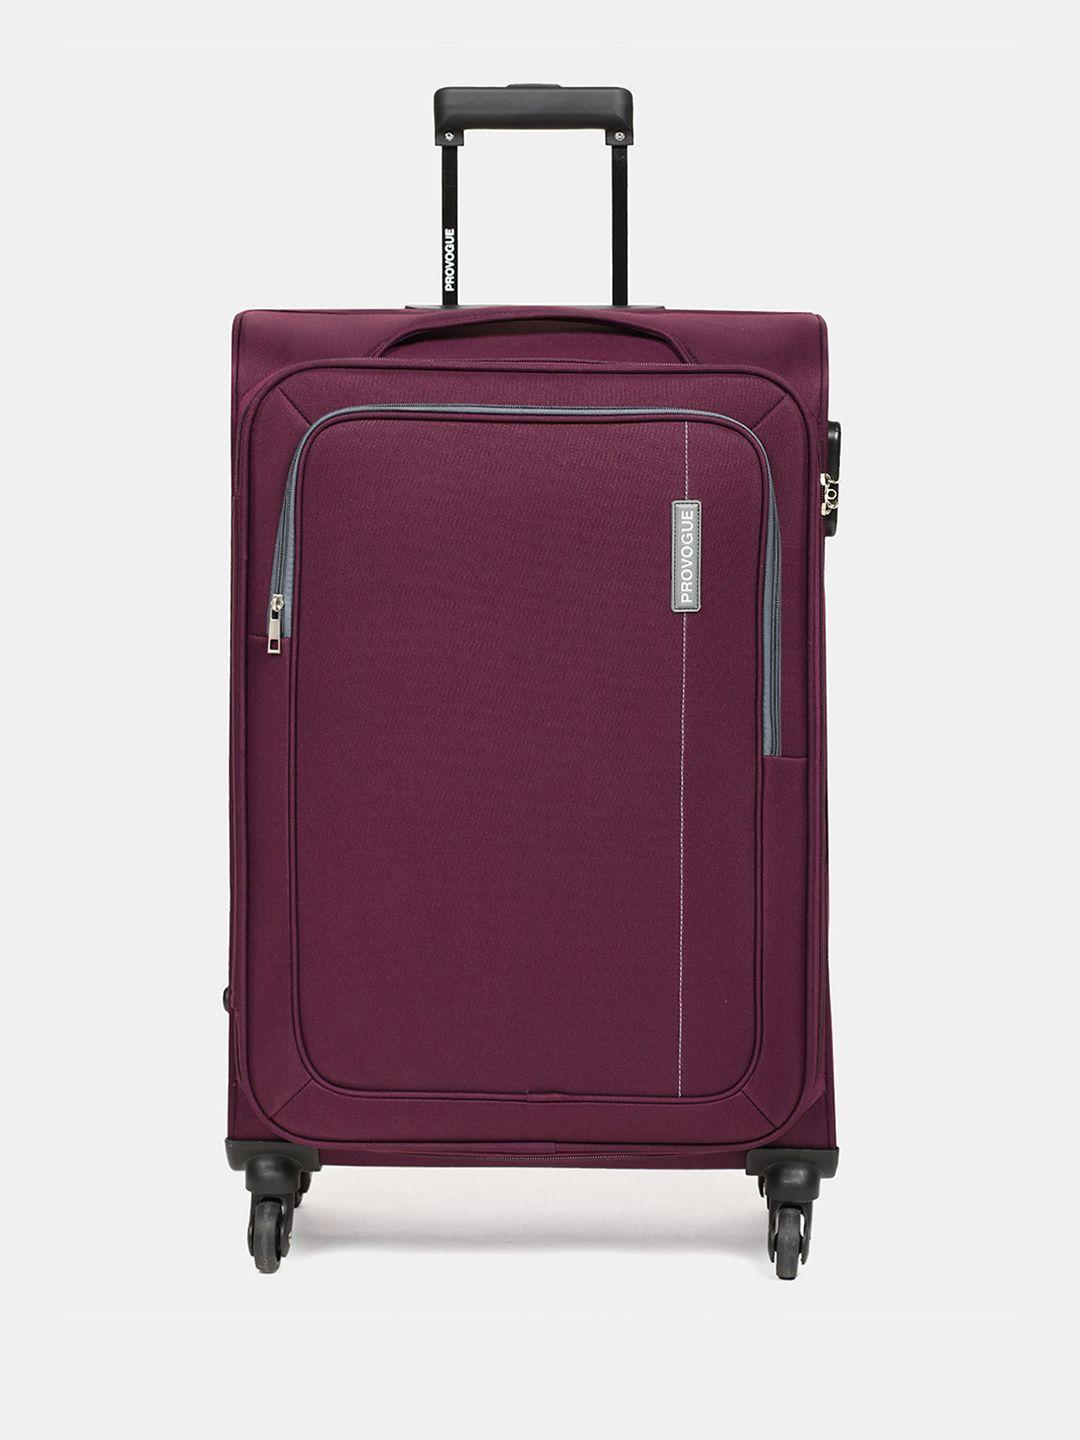 provogue-unisex-medium-trolley-suitcase